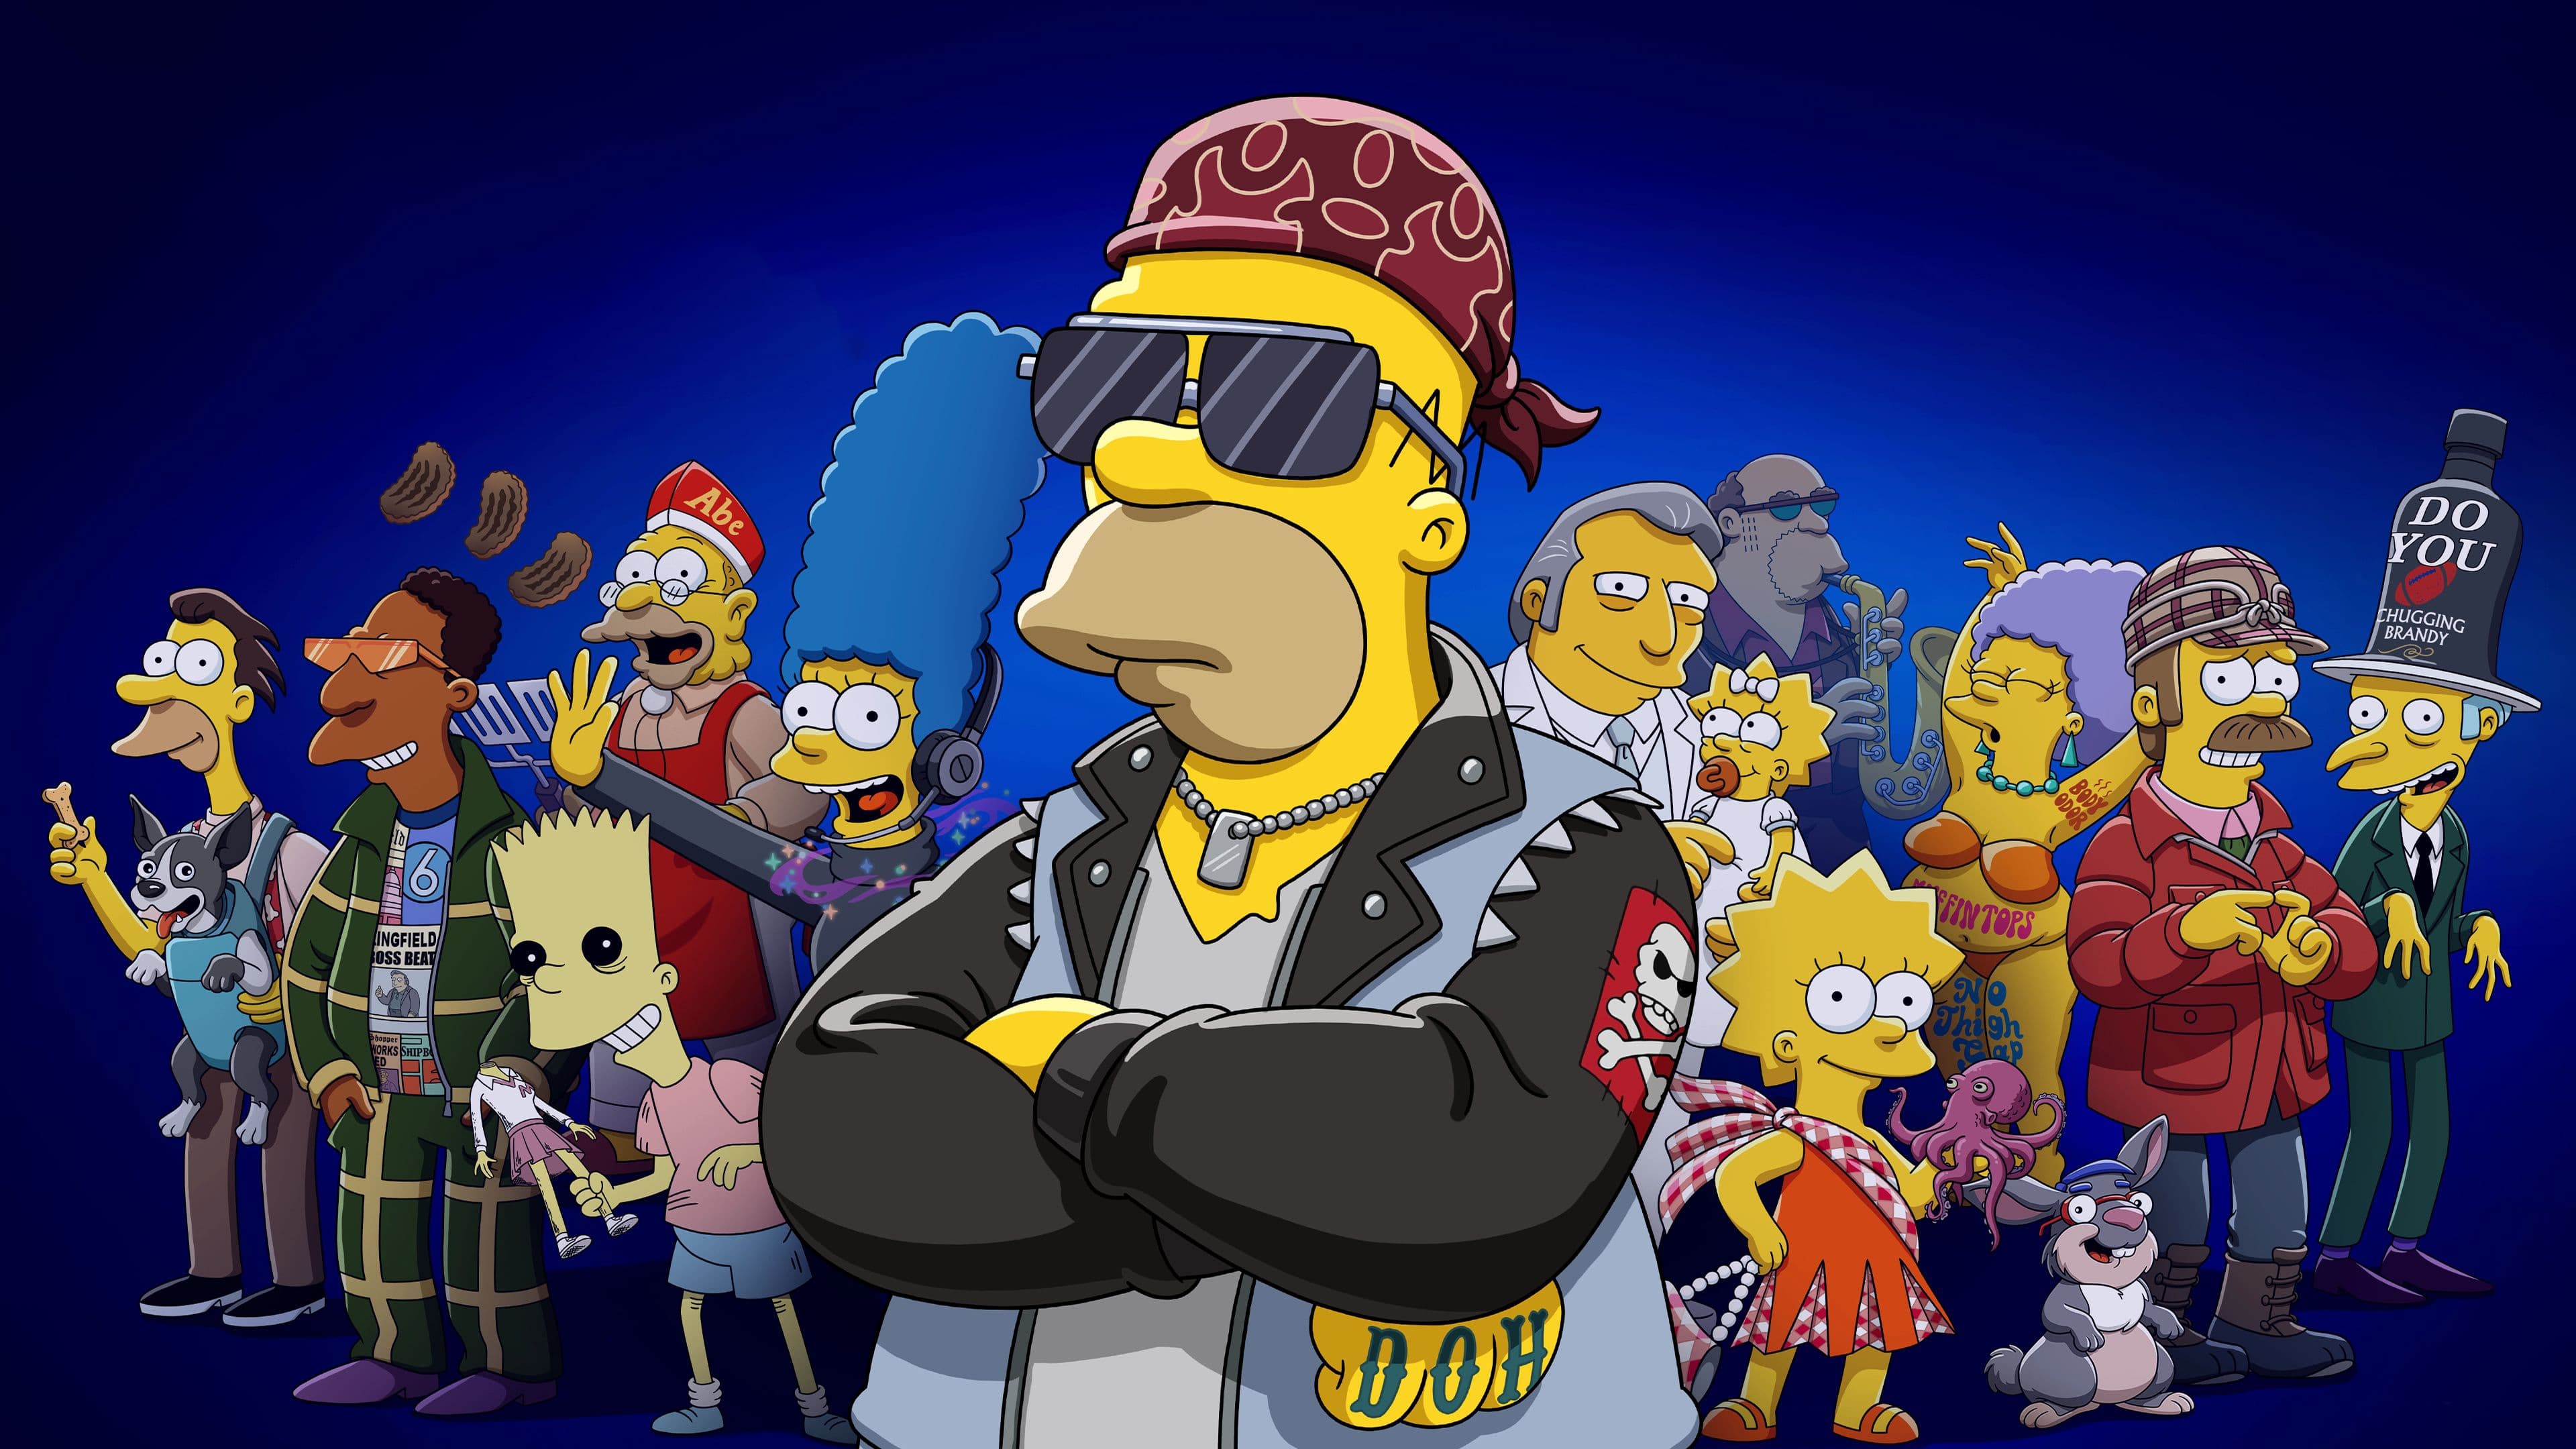 The Simpsons - Season 9